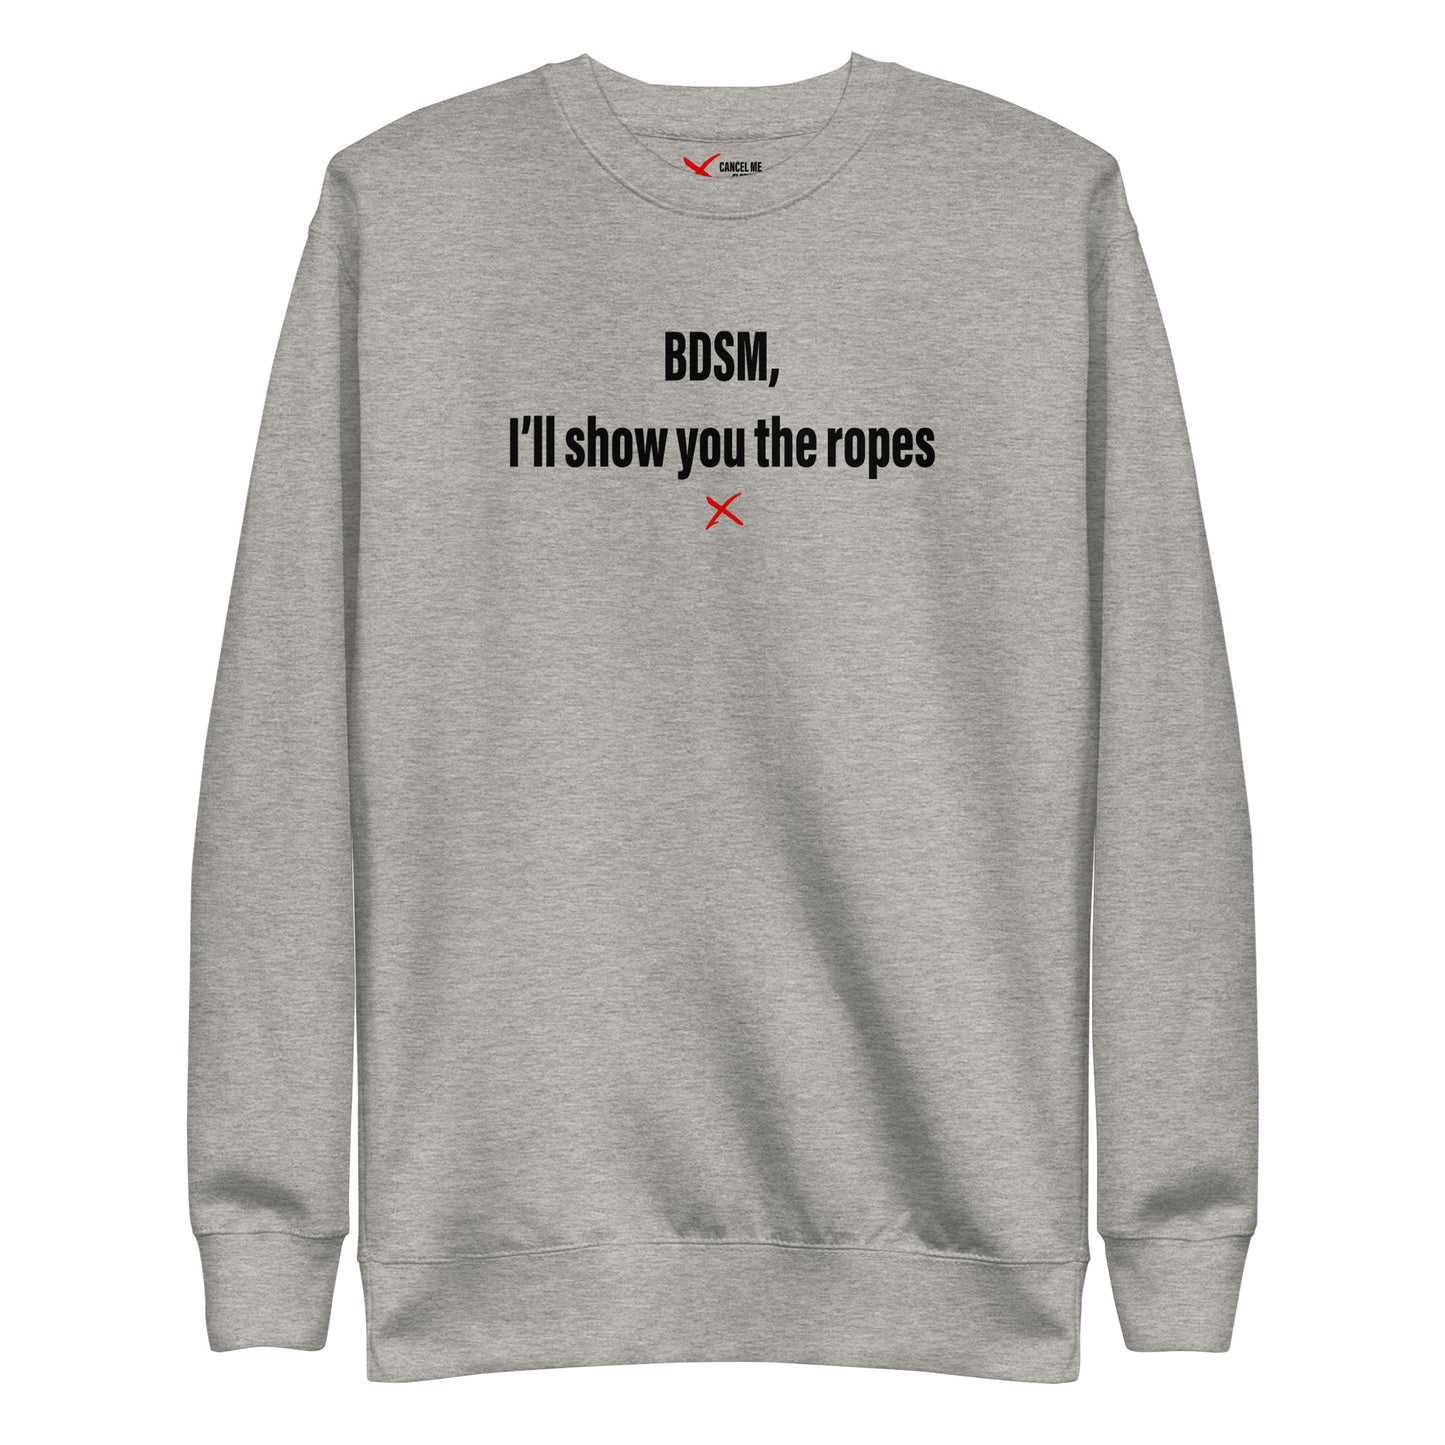 BDSM, I'll show you the ropes - Sweatshirt